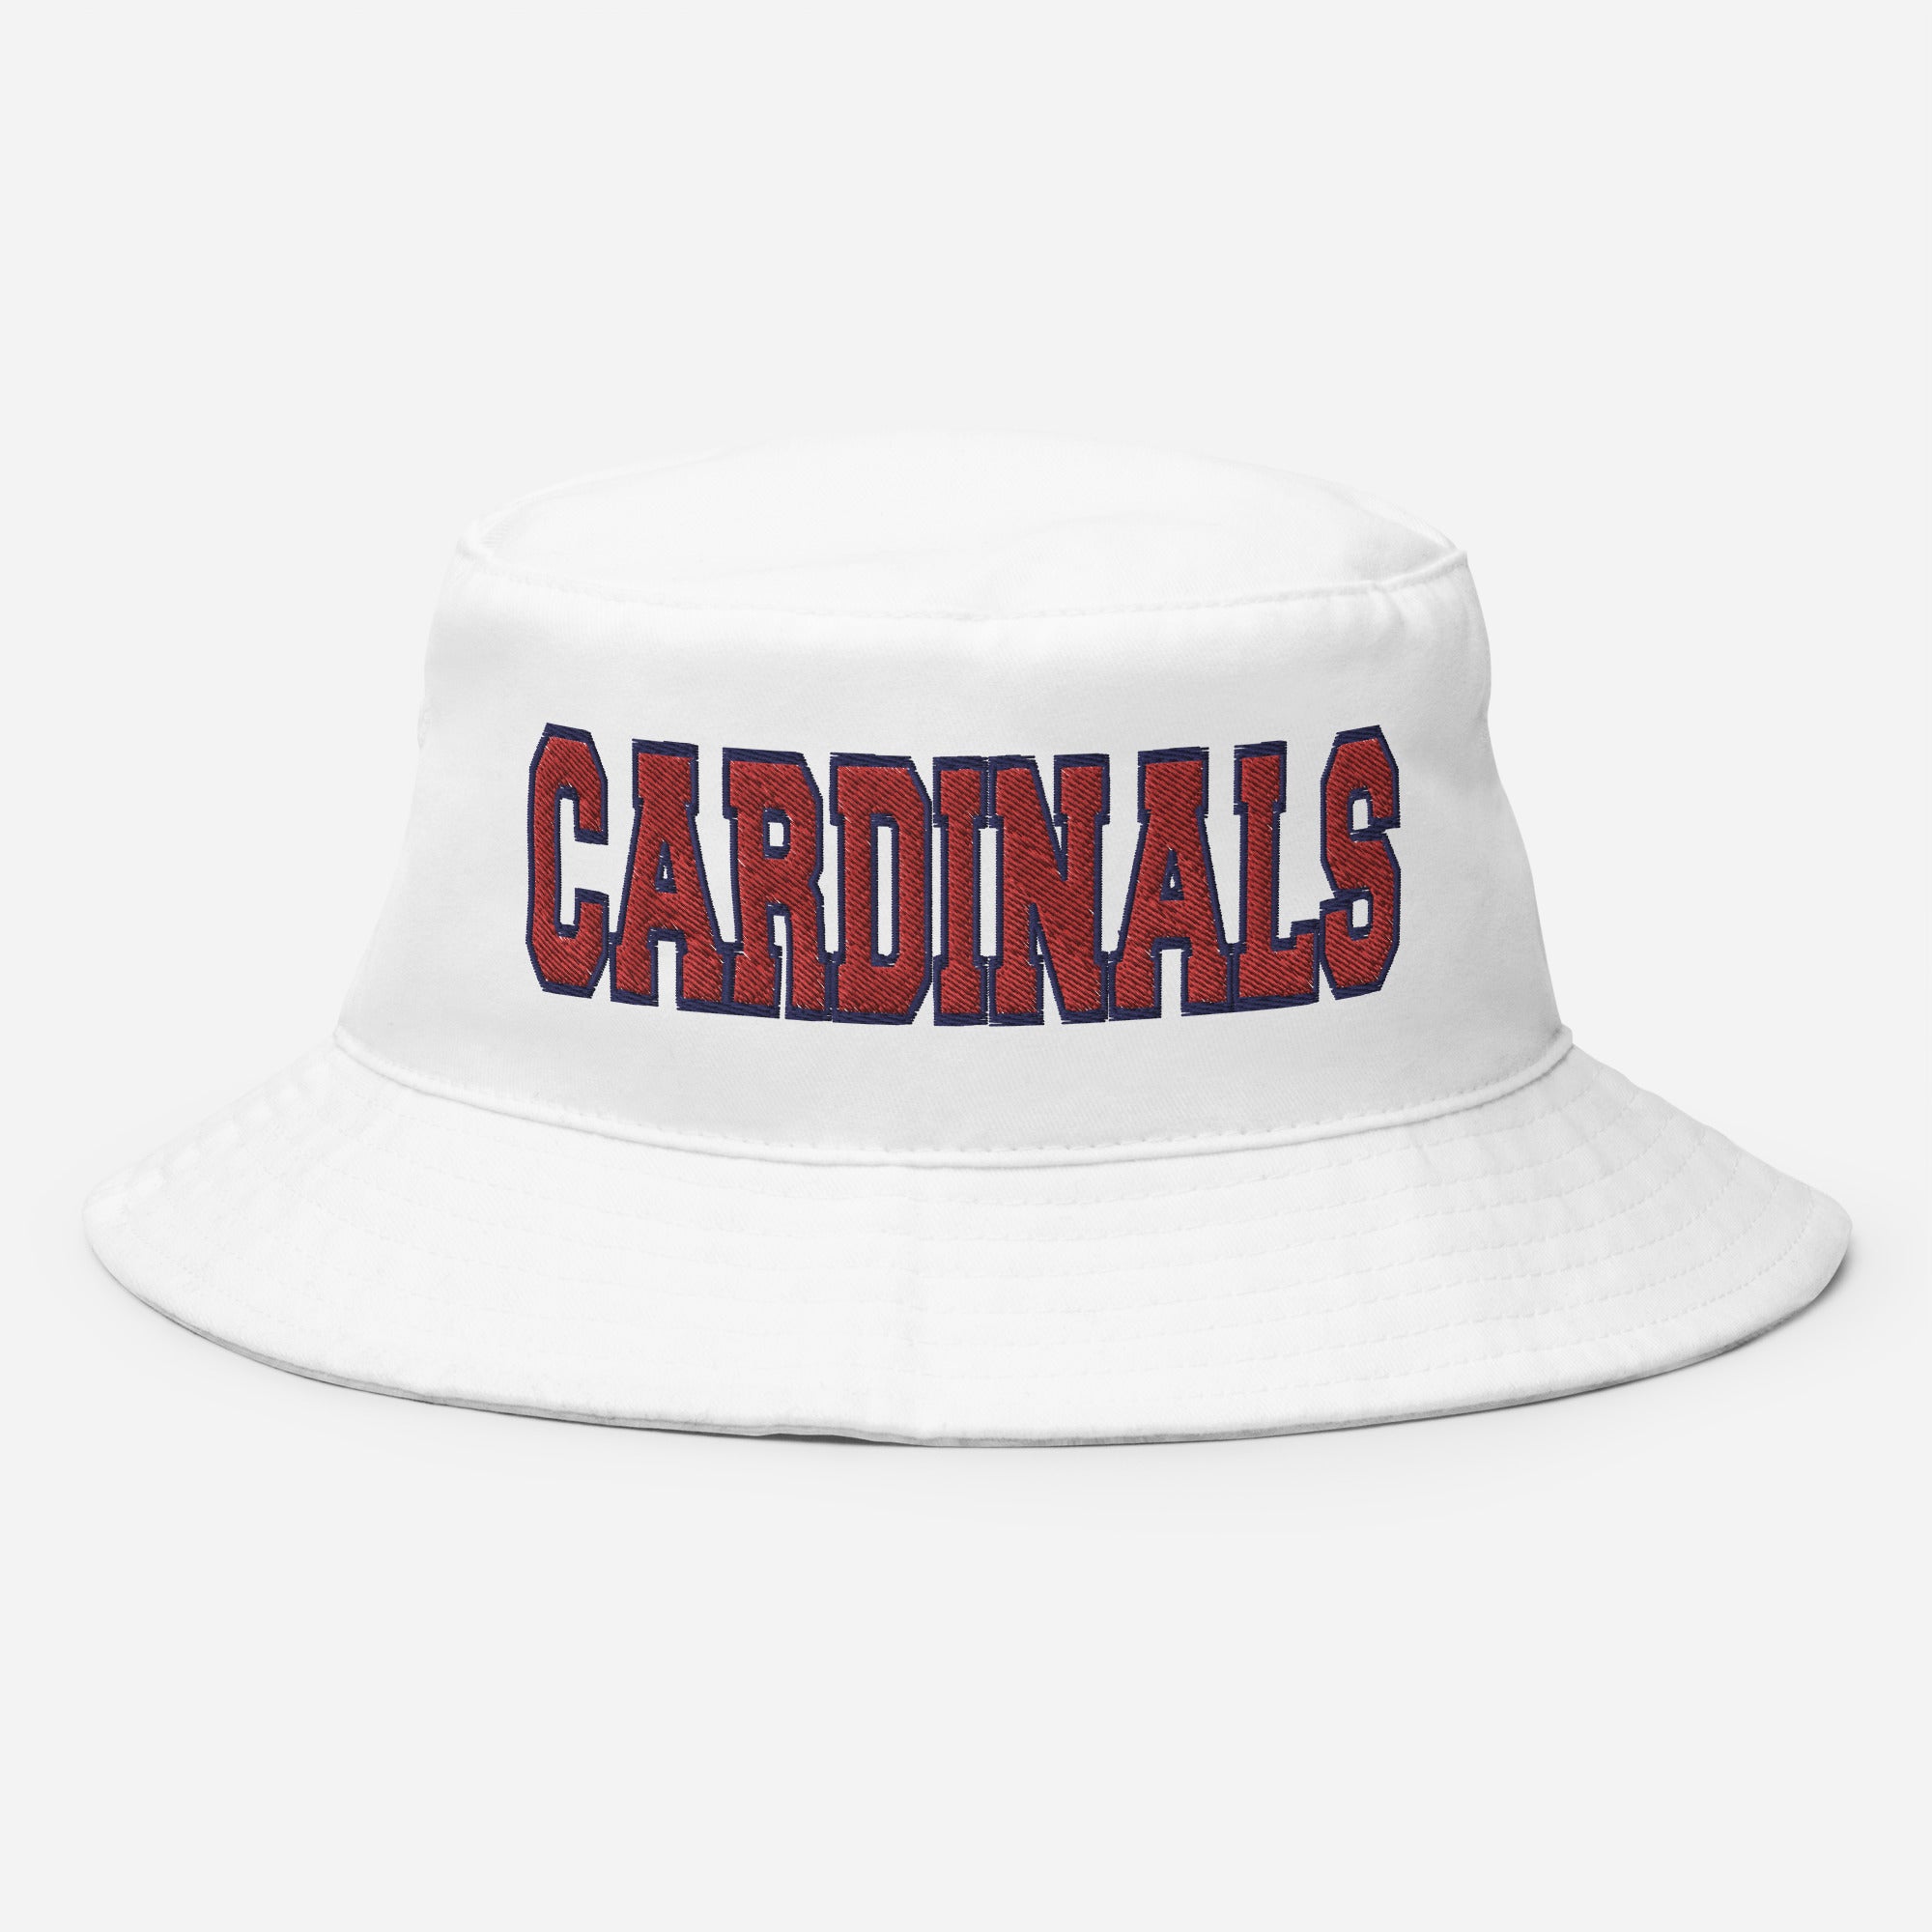 st louis cardinals Bucket Hat